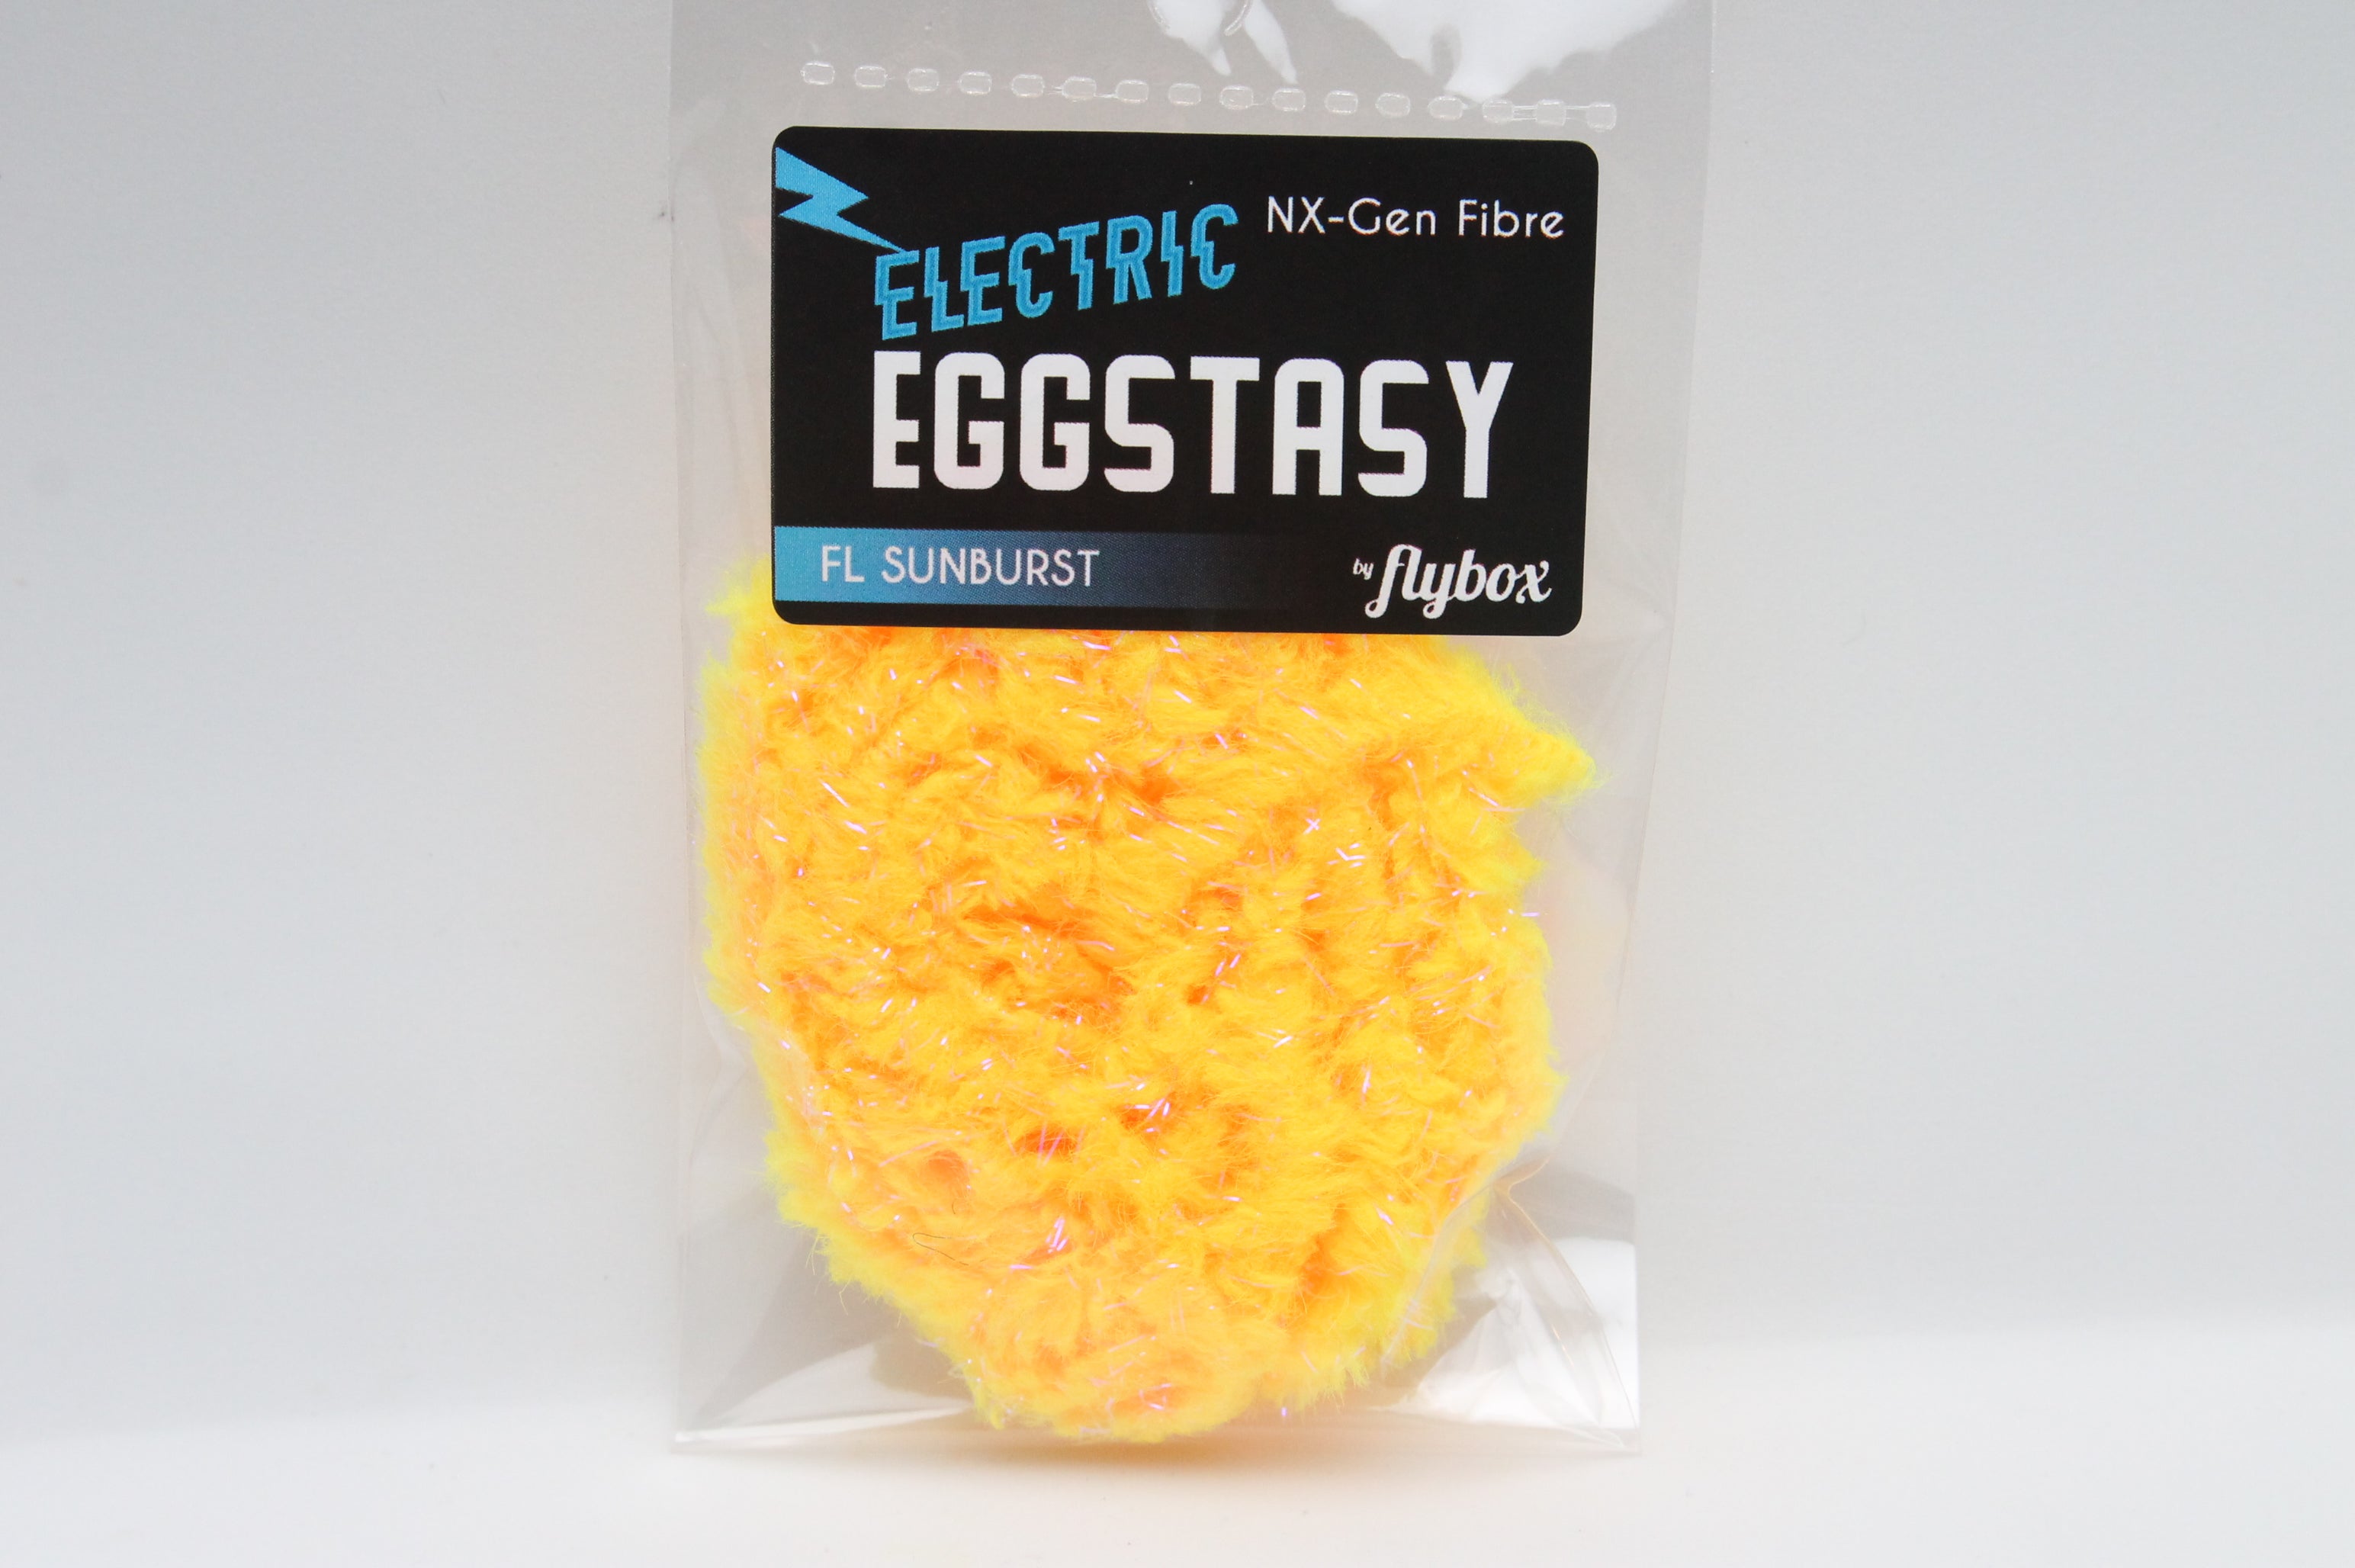 Electric Eggstacy